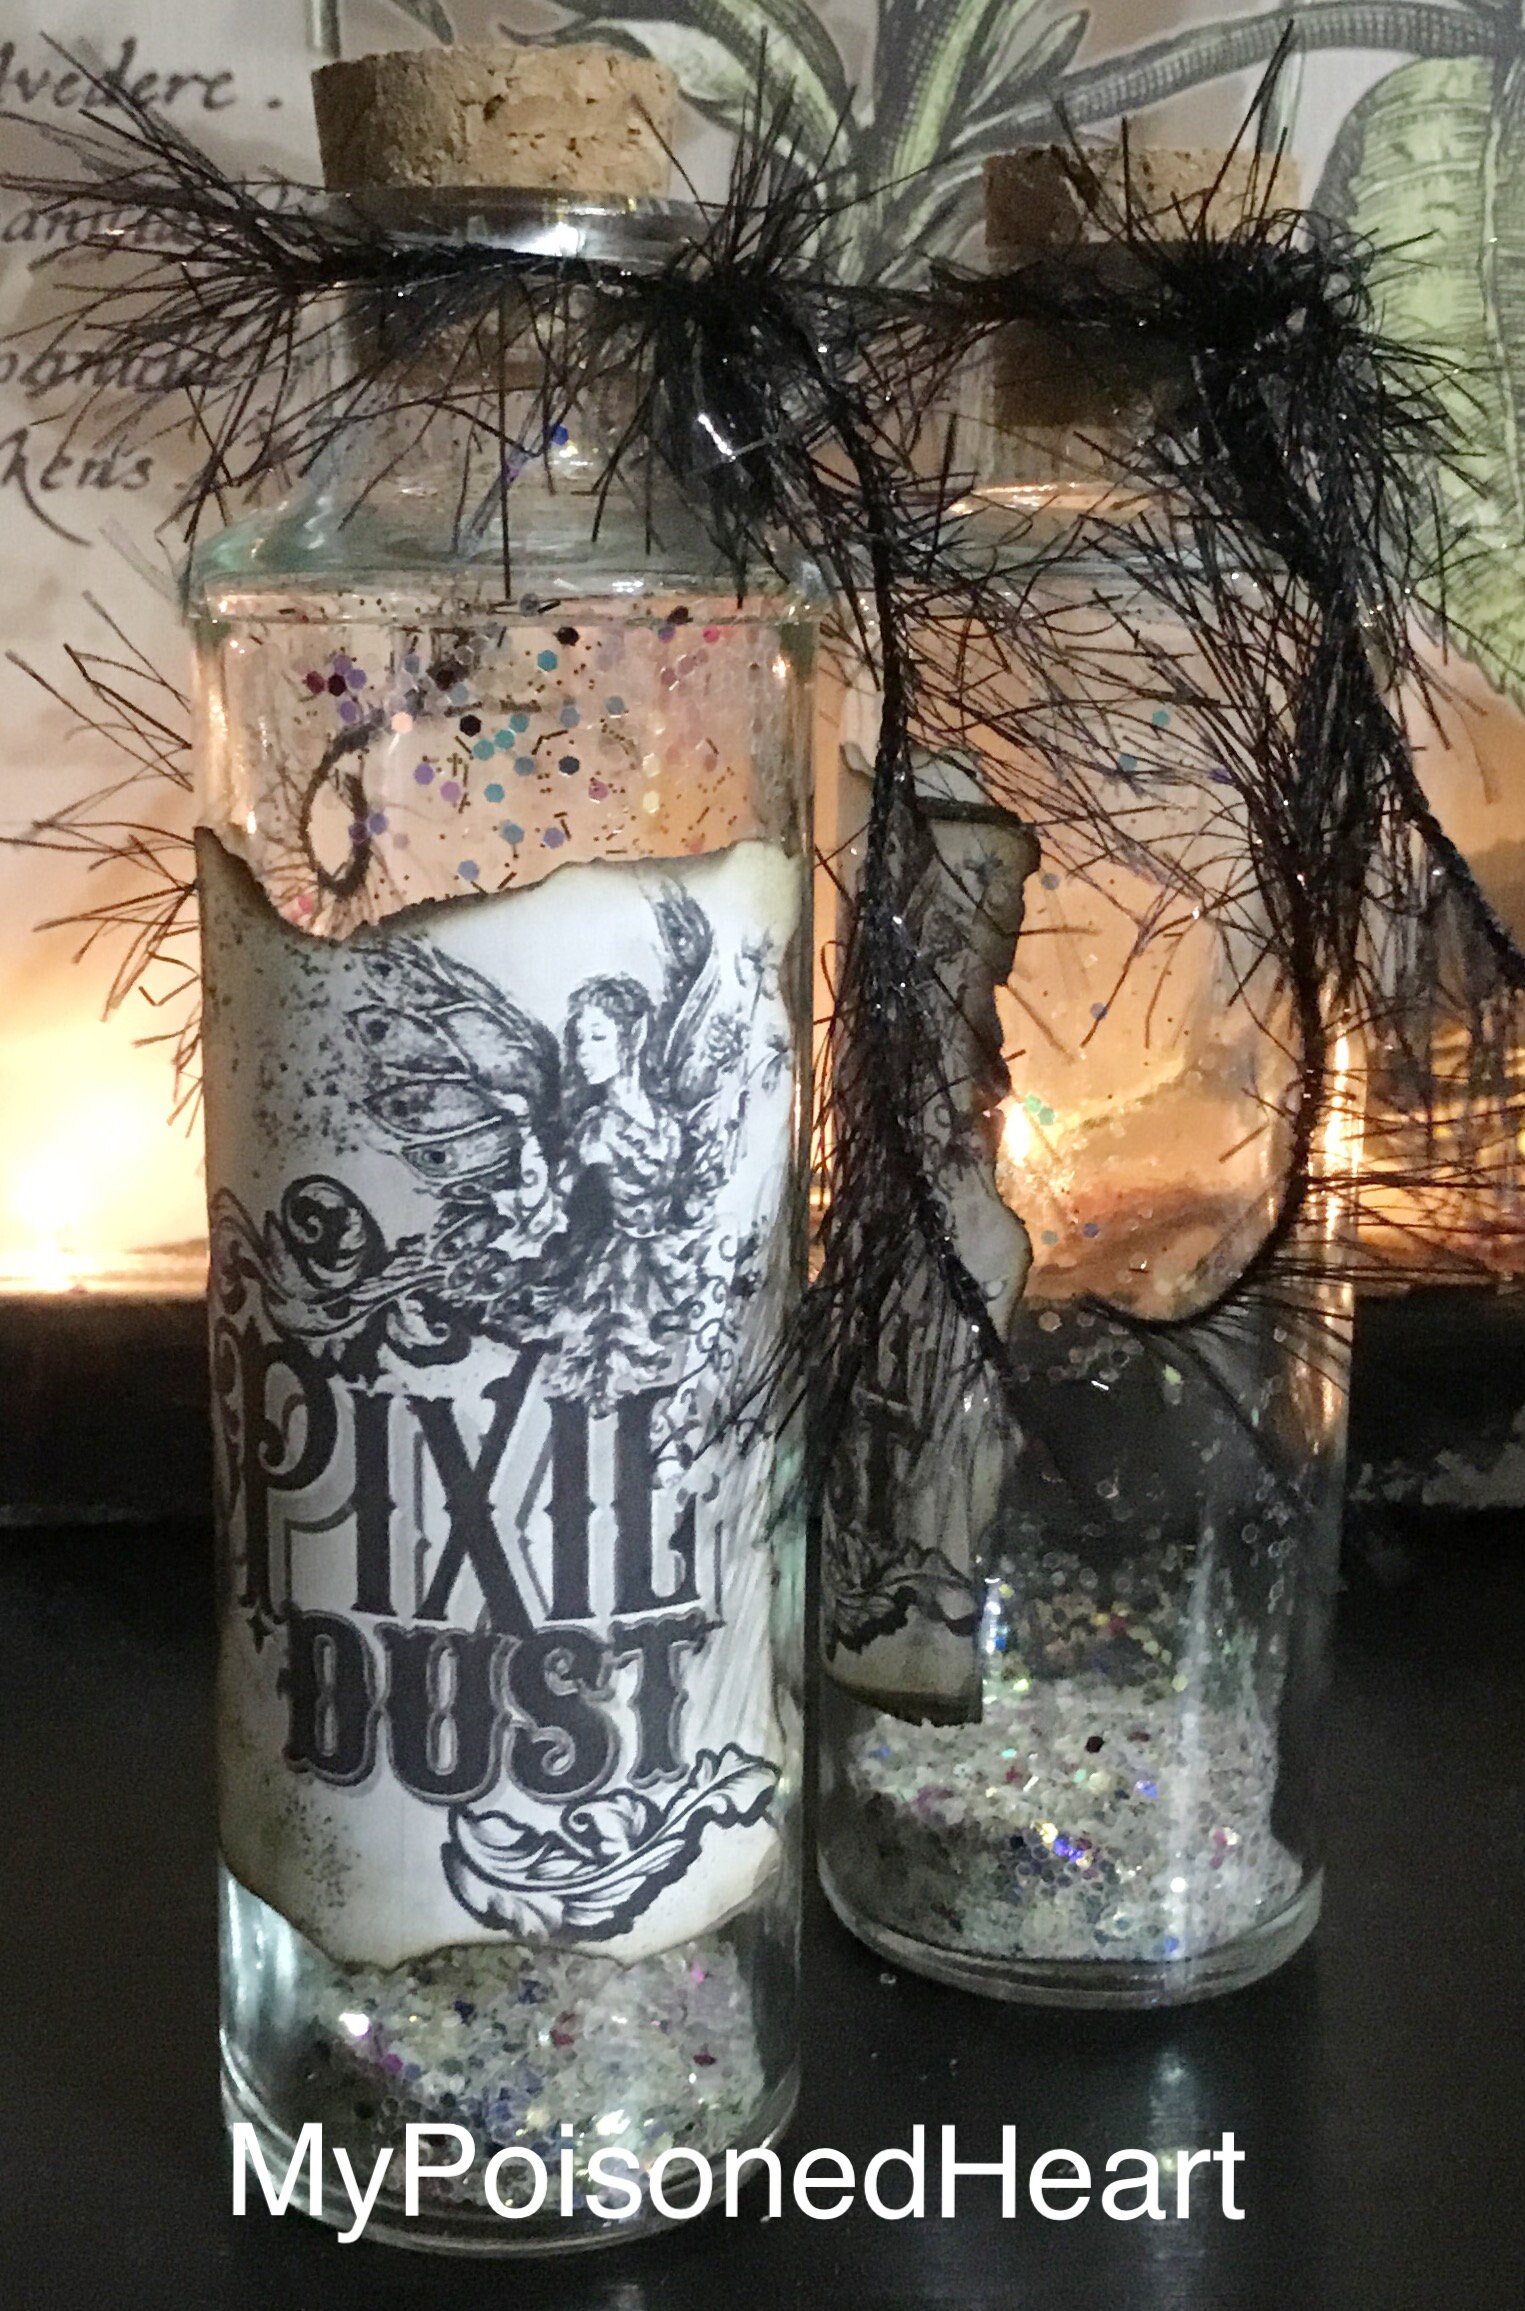 Fairy Dust Pixie Glitter Potion Bottle Wishes